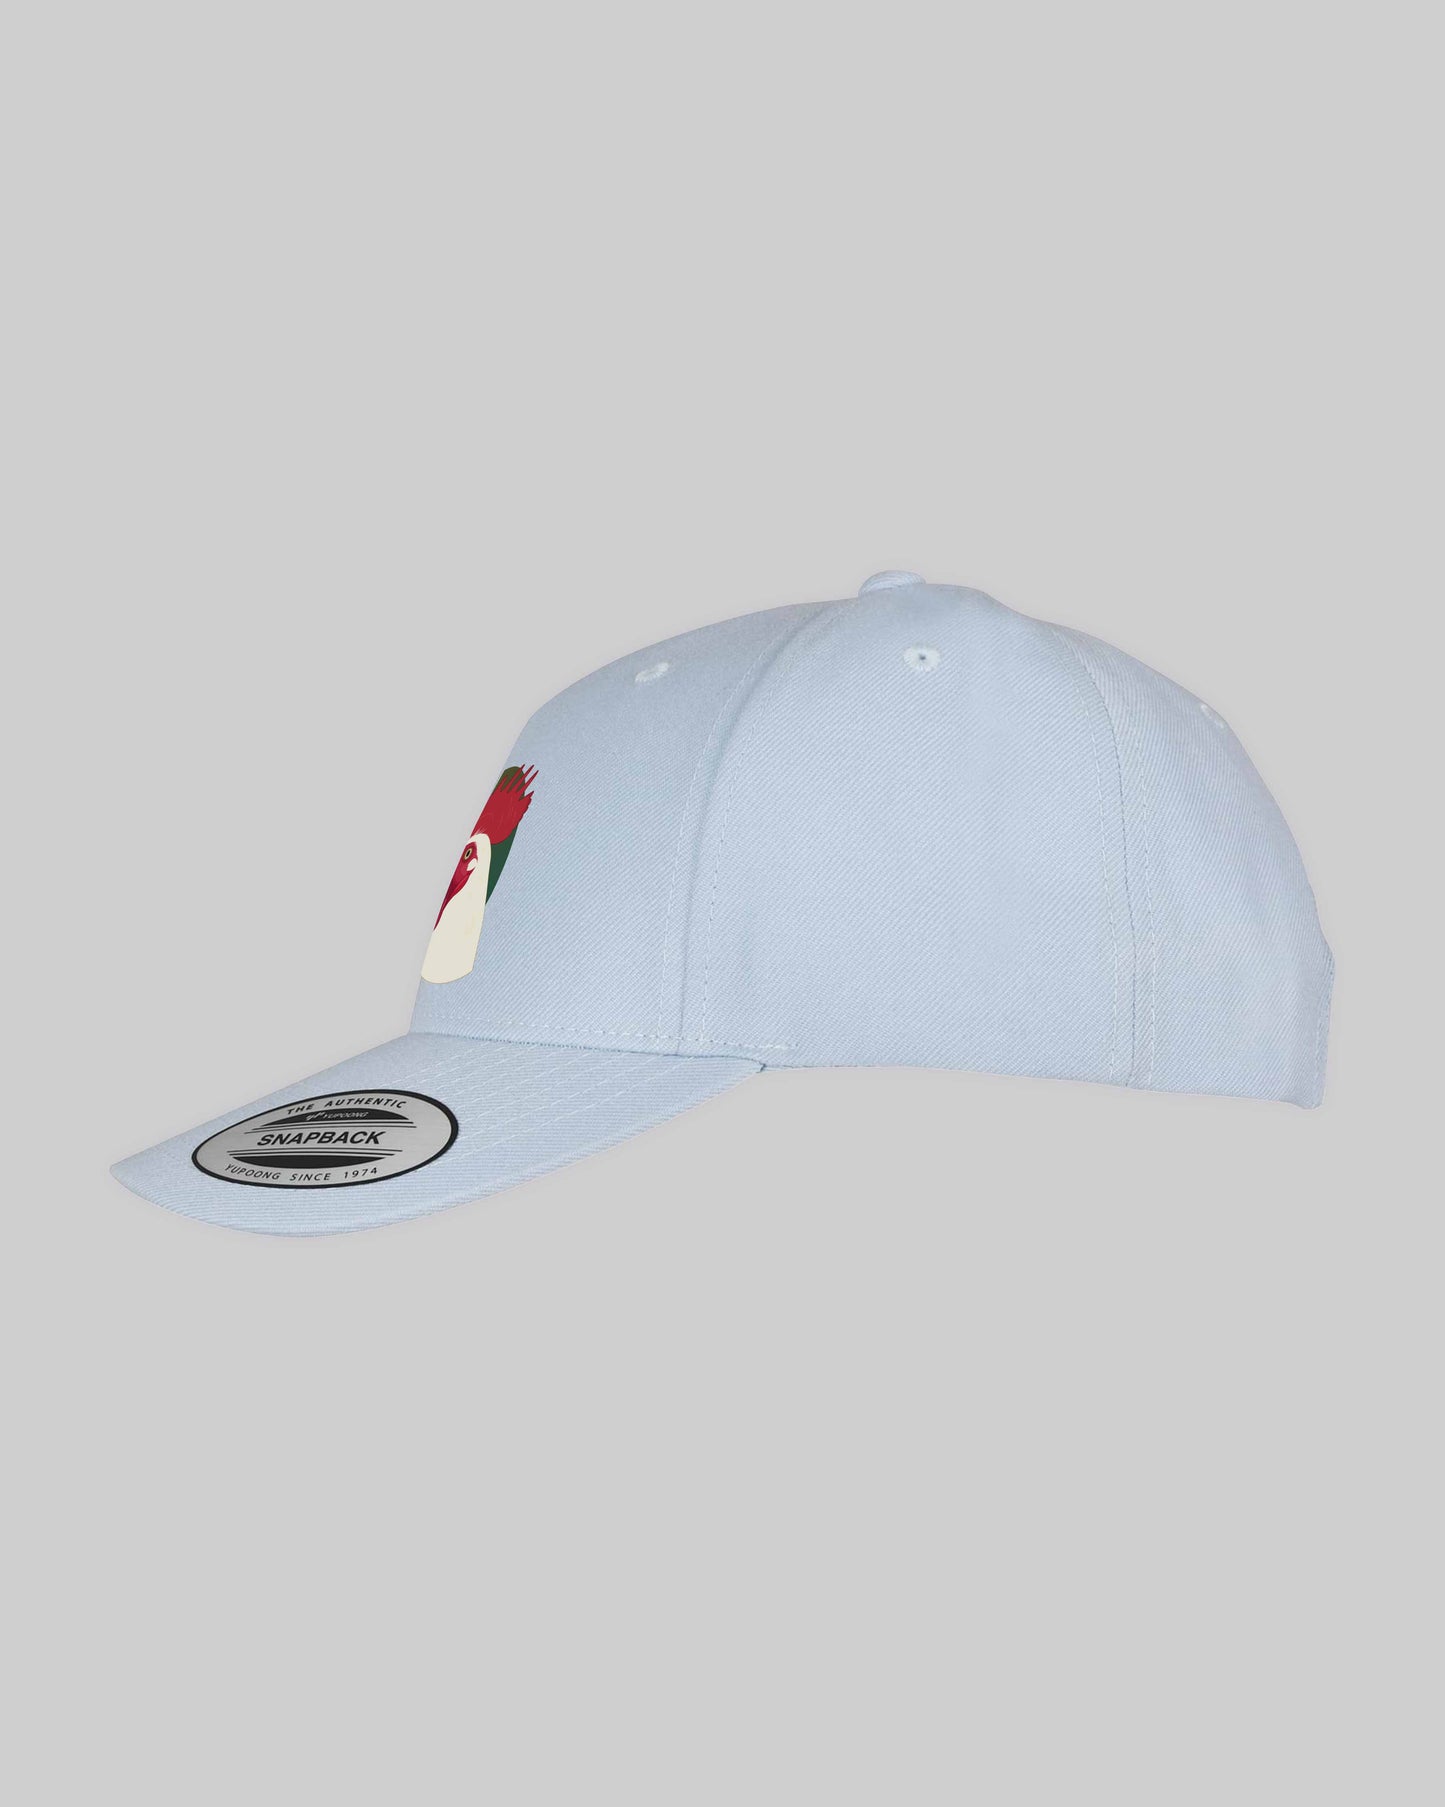 Snapback Cap "Zapfhahn" in 4 verschiedenen Farben